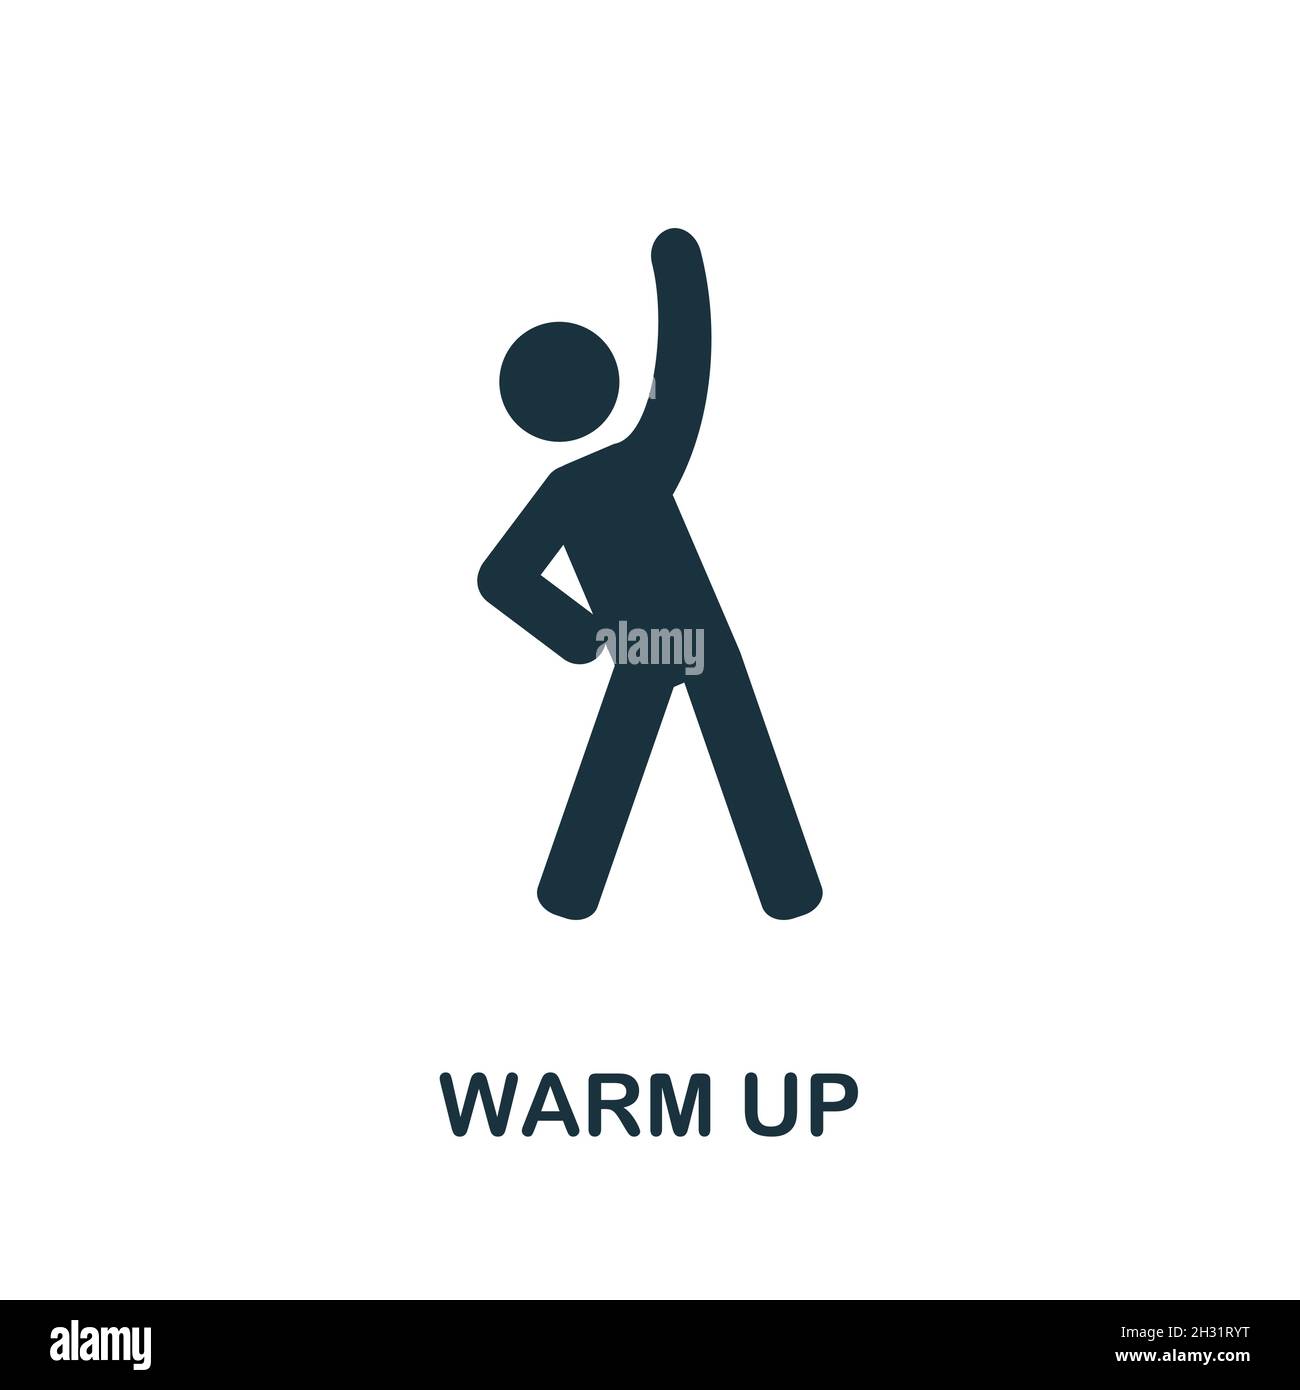 Warm Up Icon Graphic by aimagenarium · Creative Fabrica